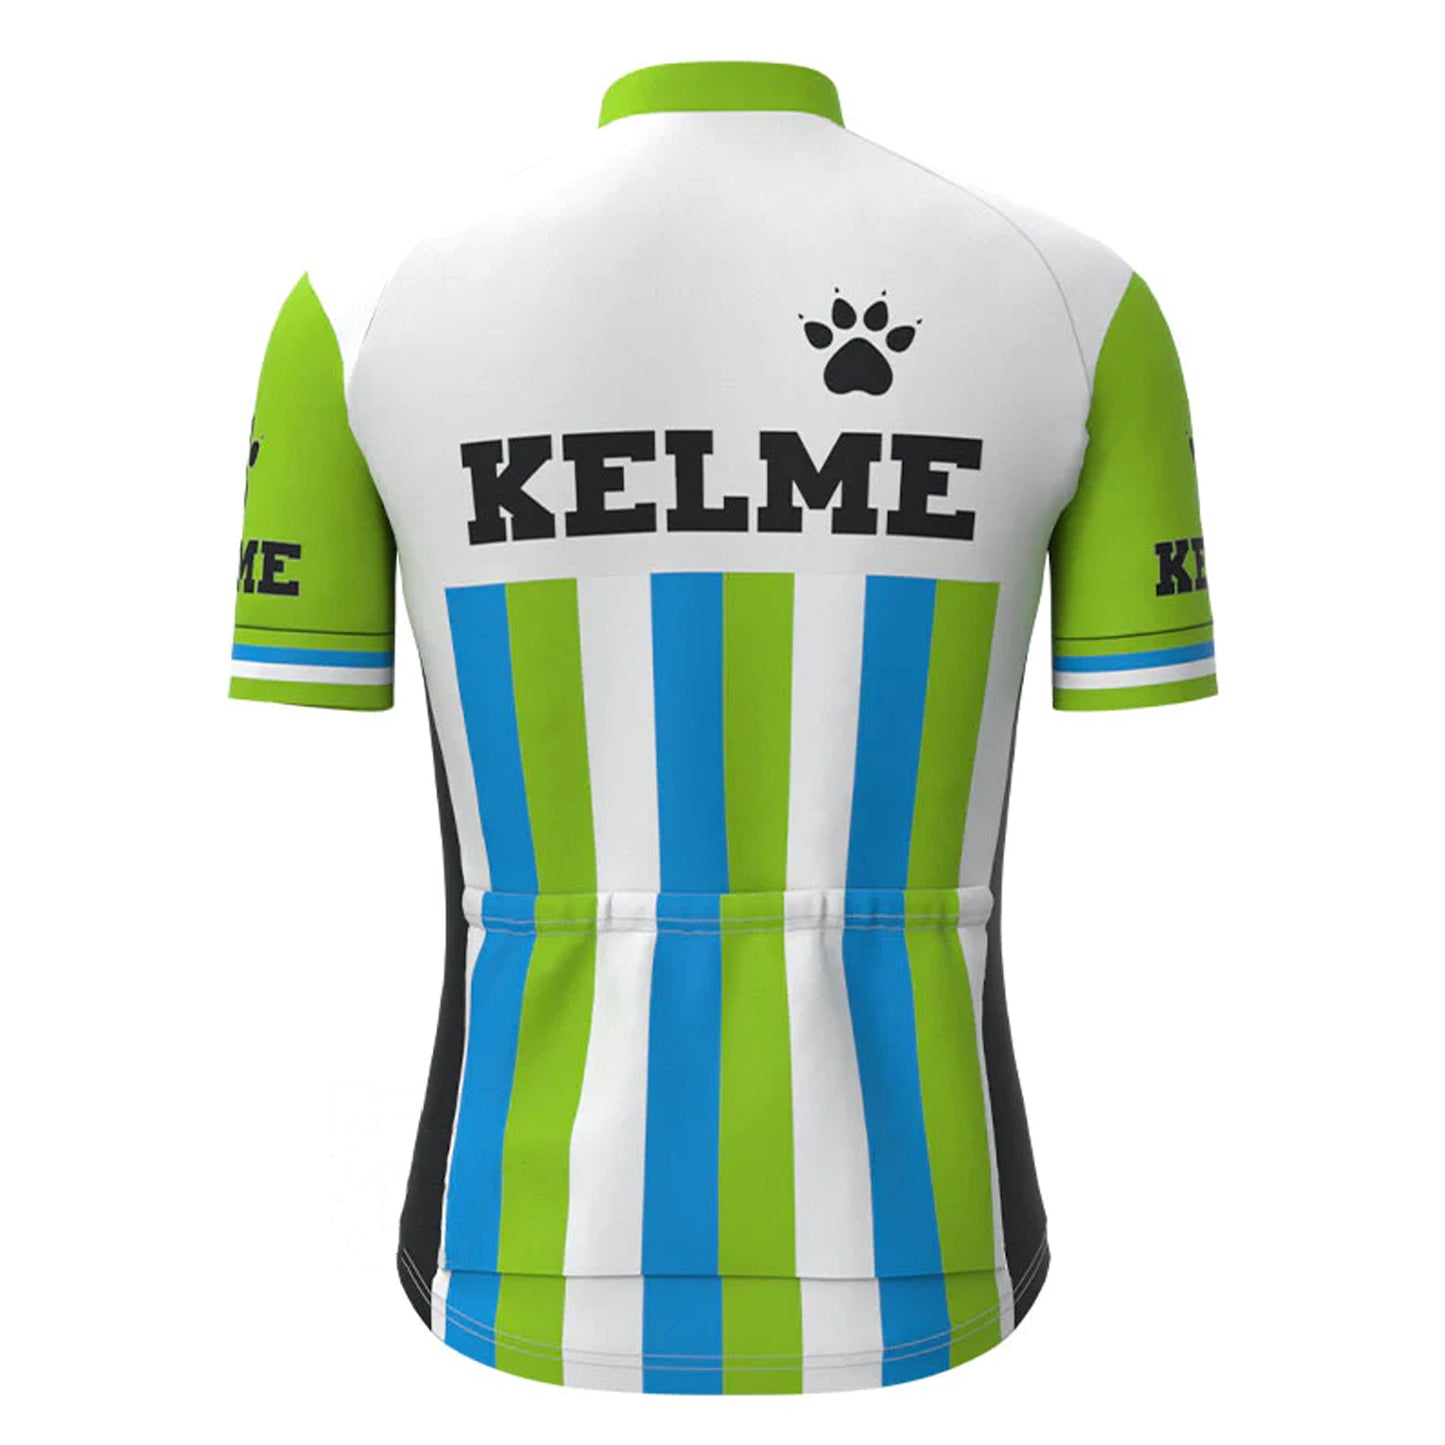 Kelme Green Vintage Short Sleeve Cycling Jersey Top